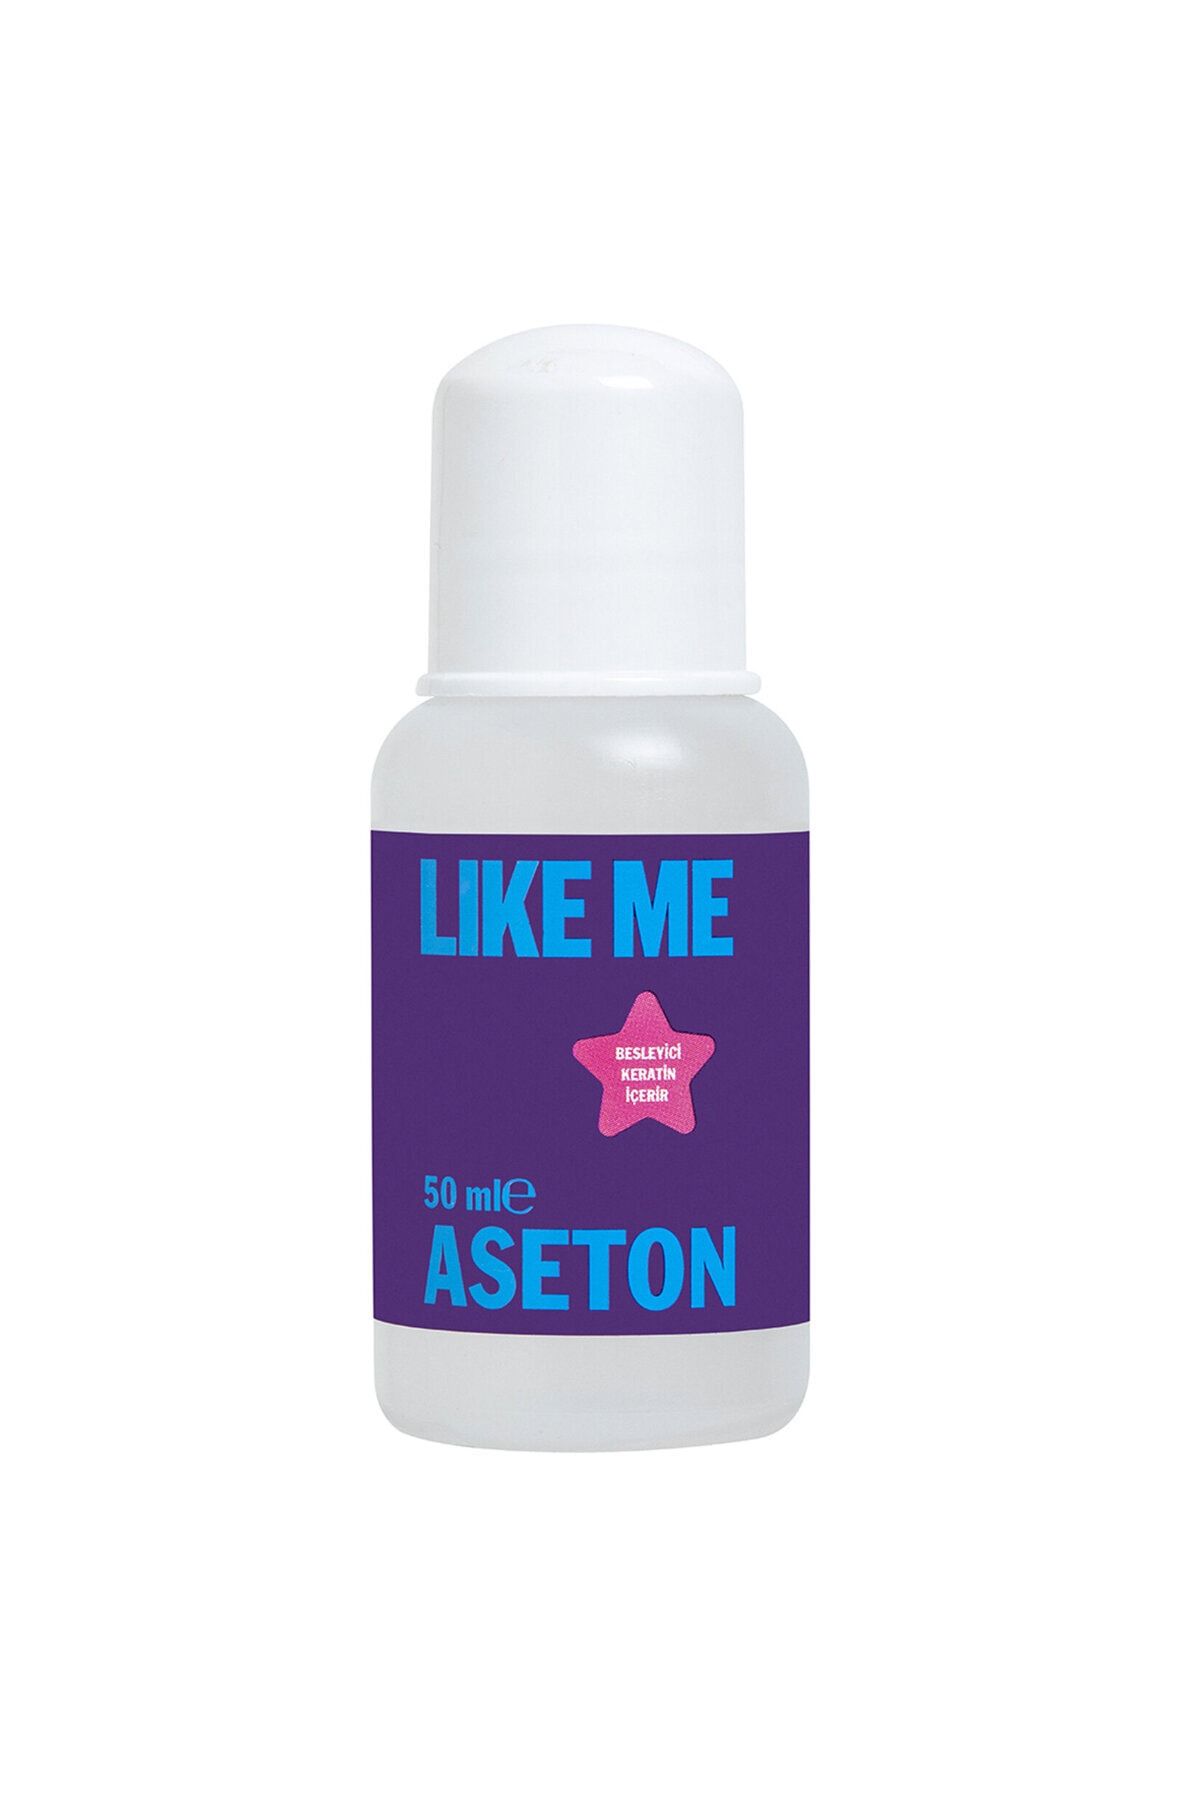 Like me Aseton 50 ml